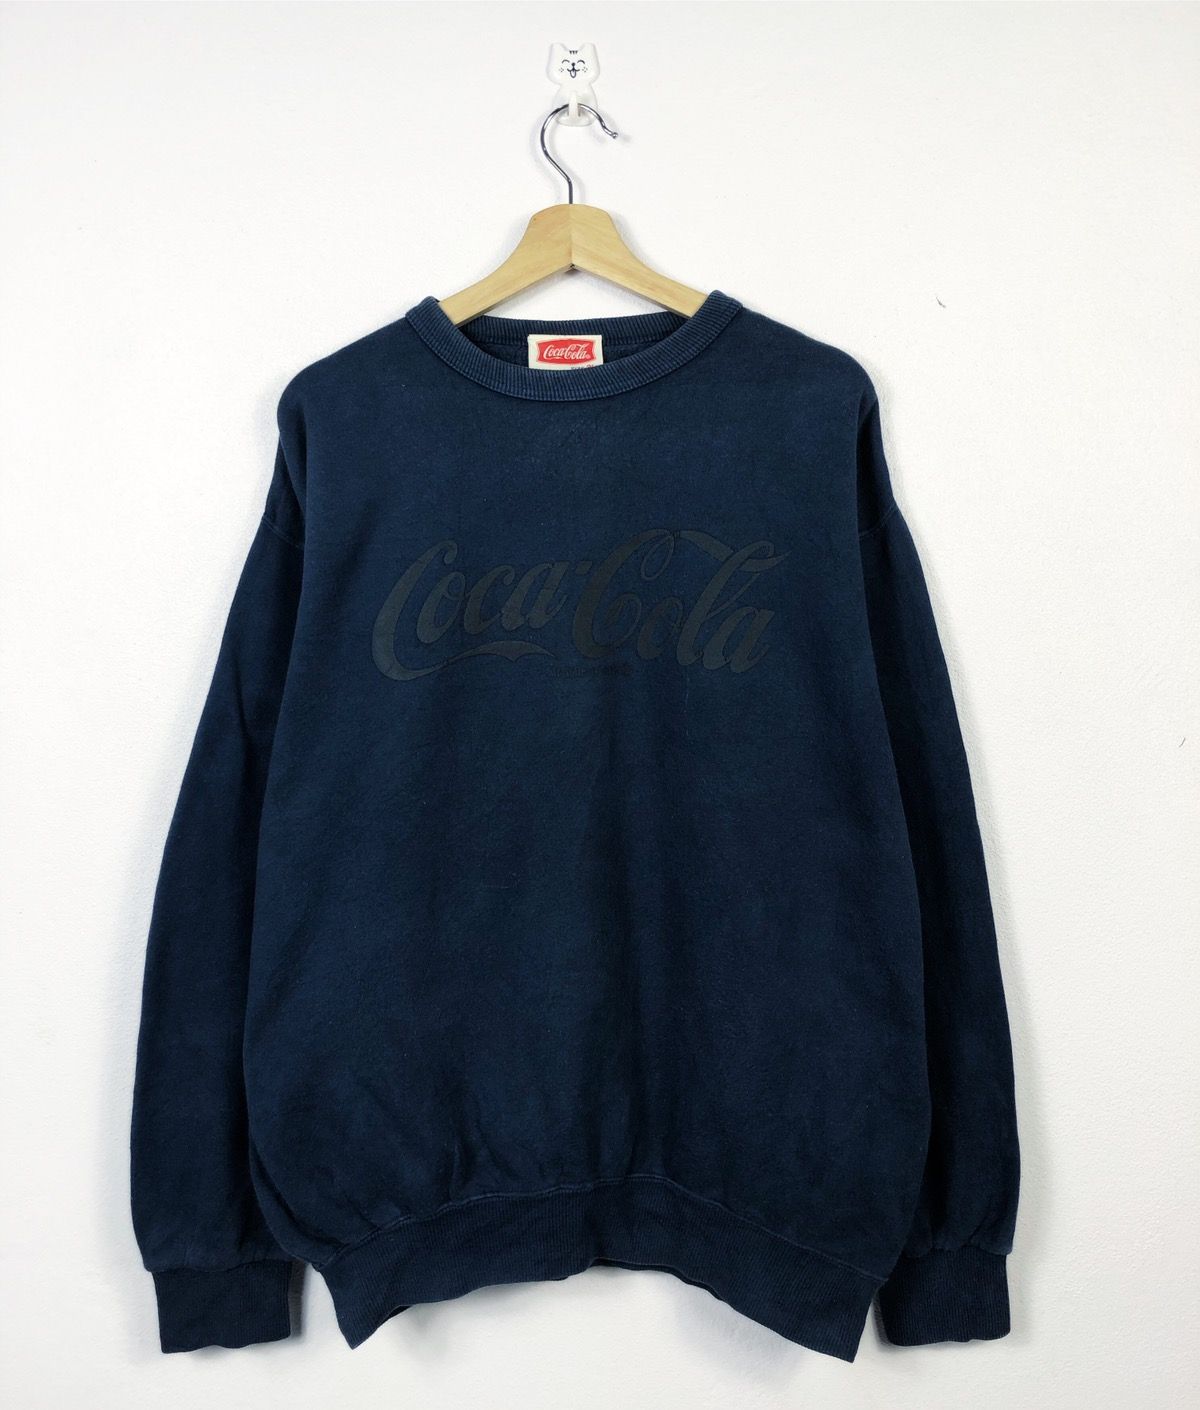 Vintage Rare Vintage 1994 Coca Cola Sweatshirt Size US XXL / EU 58 / 5 - 1 Preview